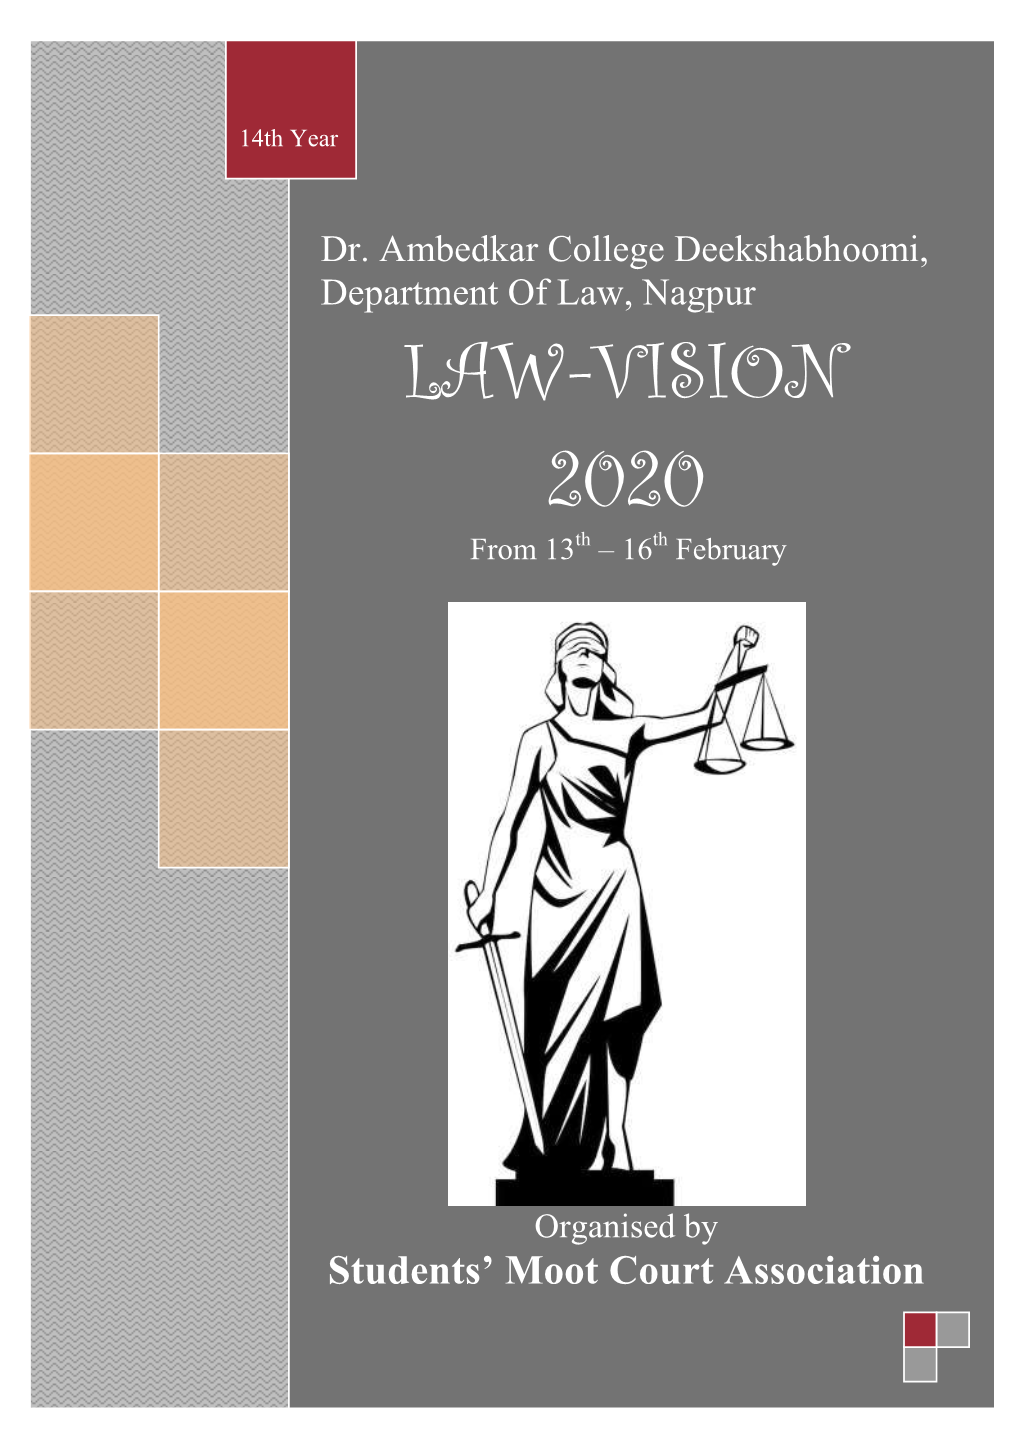 Dr. Ambedkar College Deekshabhoomi, Department of Law, Nagpur LAW-VISION